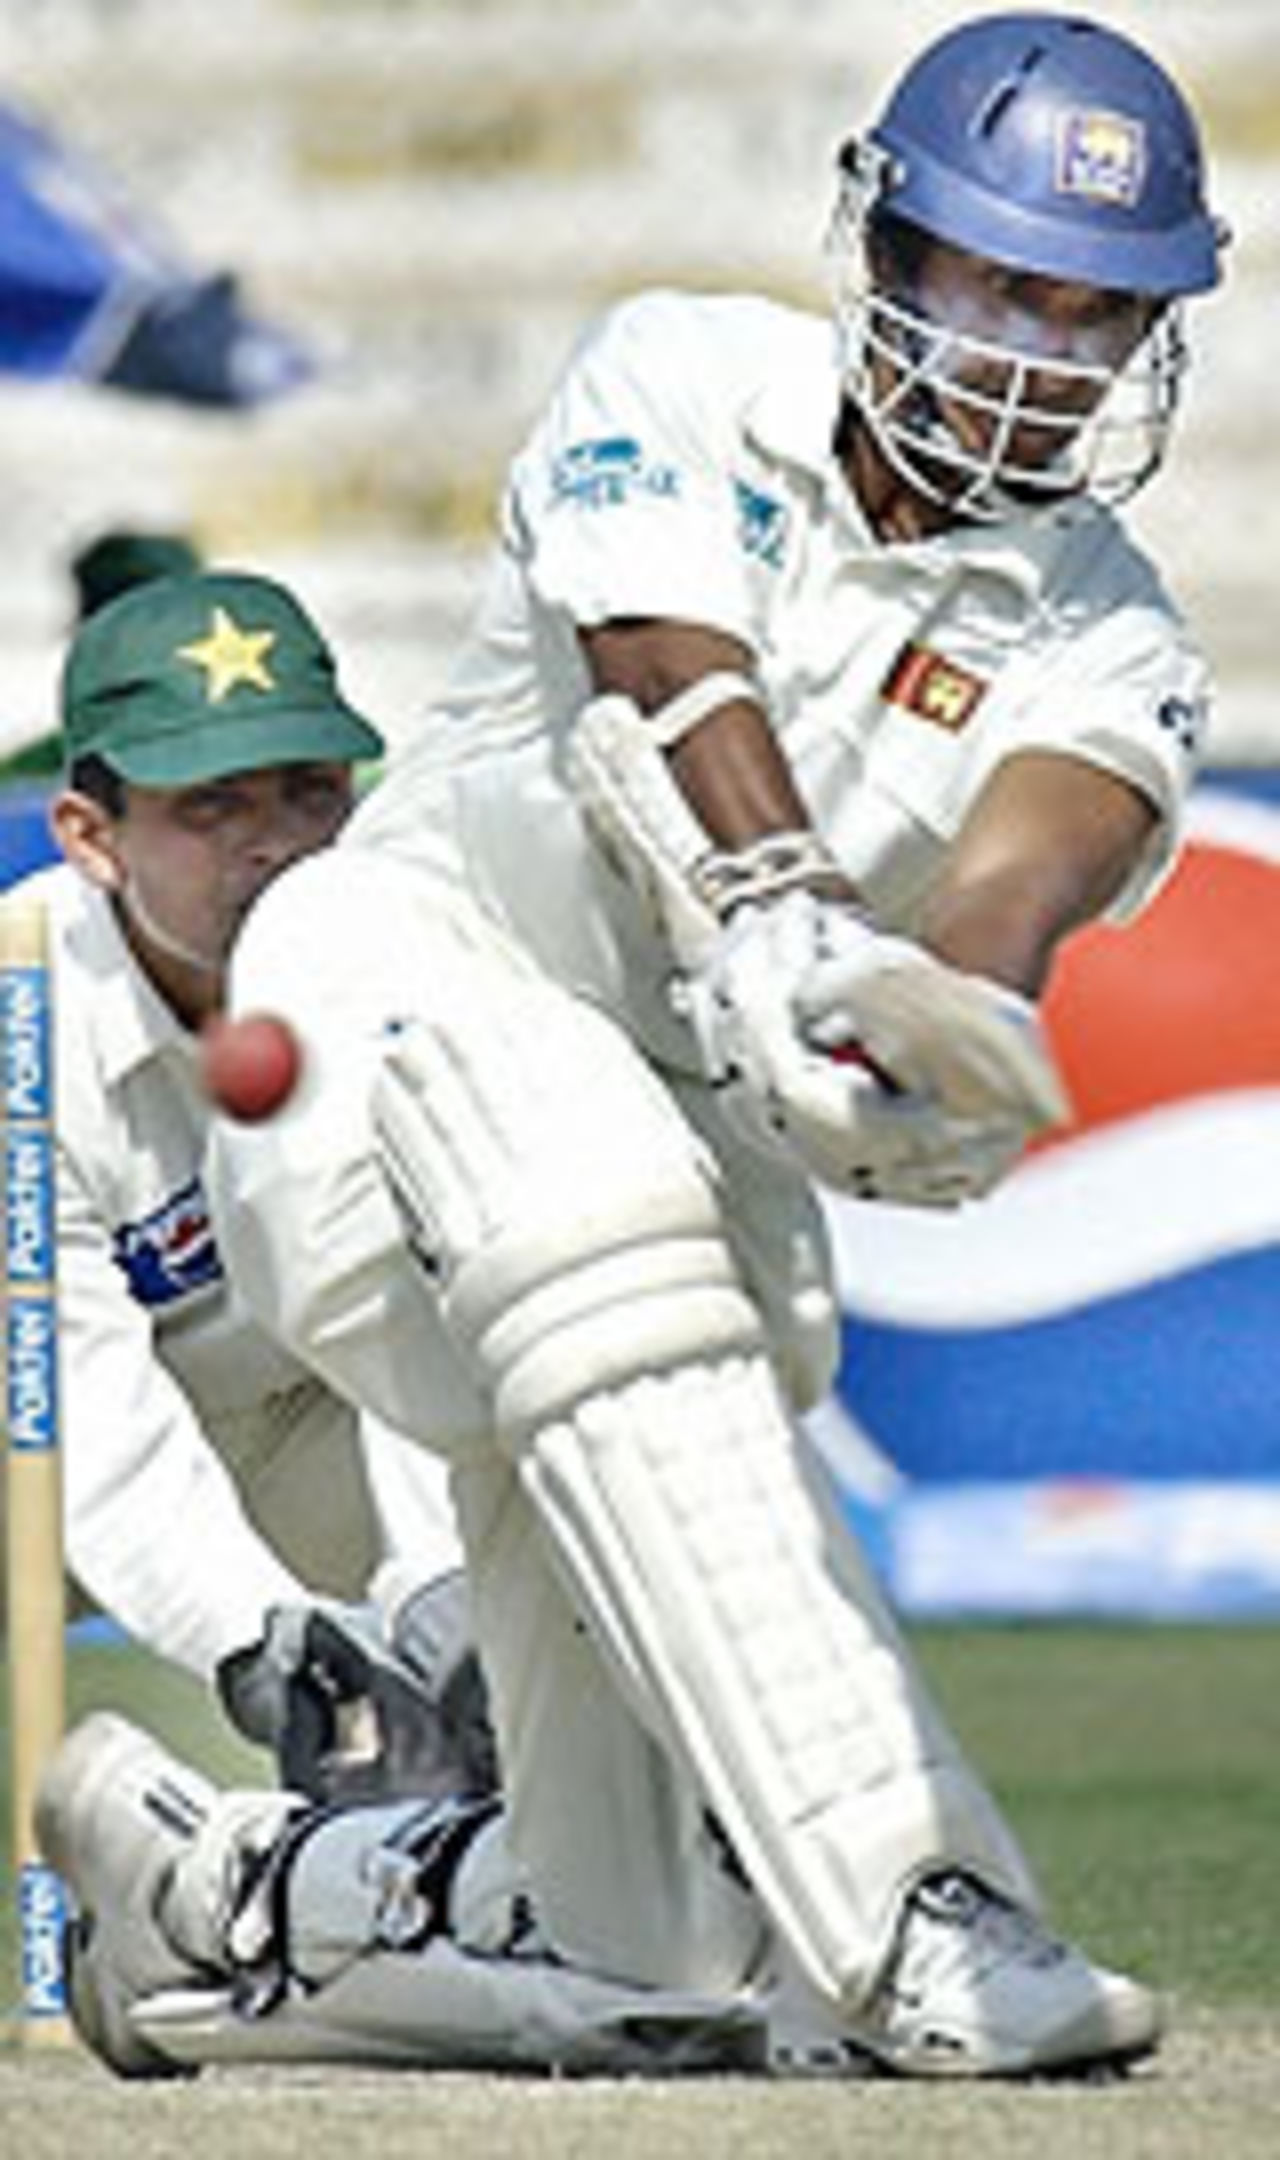 Kumar Sangakkara sweeps one away, Pakistan v Sri Lanka, 2nd Test, Karachi, 4th day, October 31, 2004